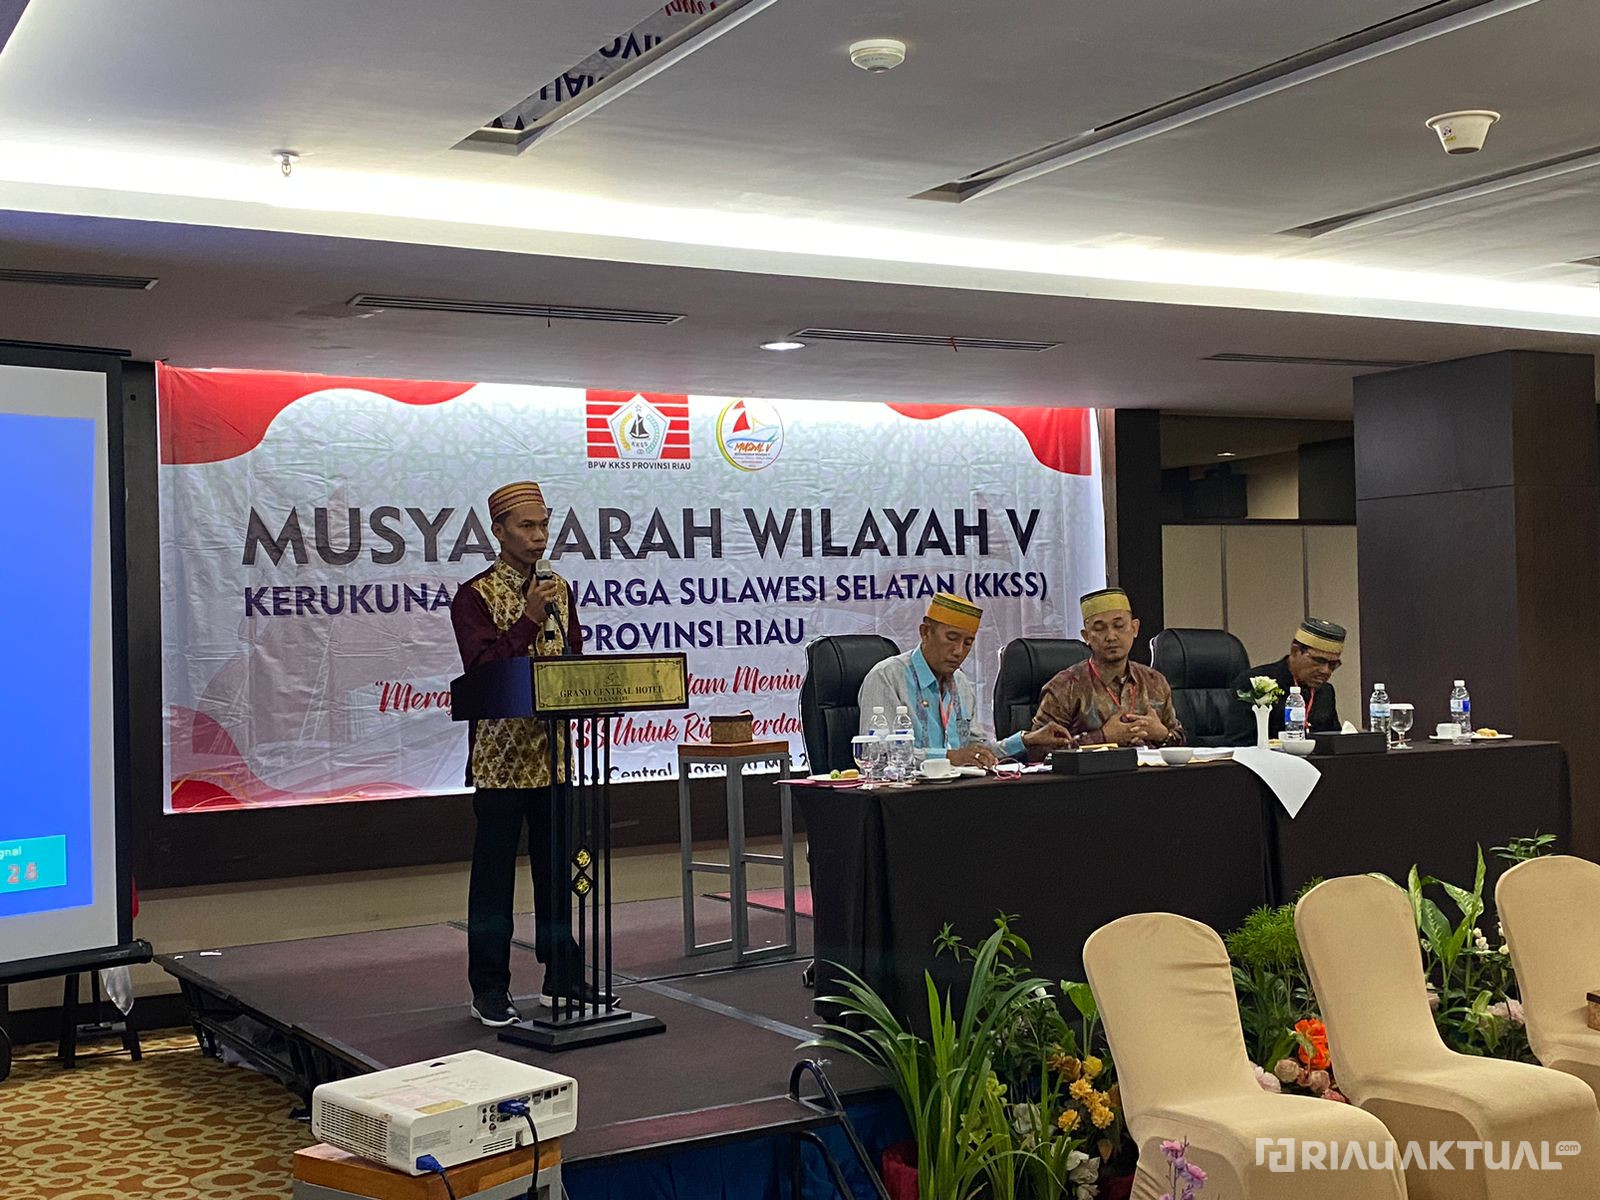 Andi Darma Taufik Komandoi Kerukunan Keluarga Sulawesi Selatan